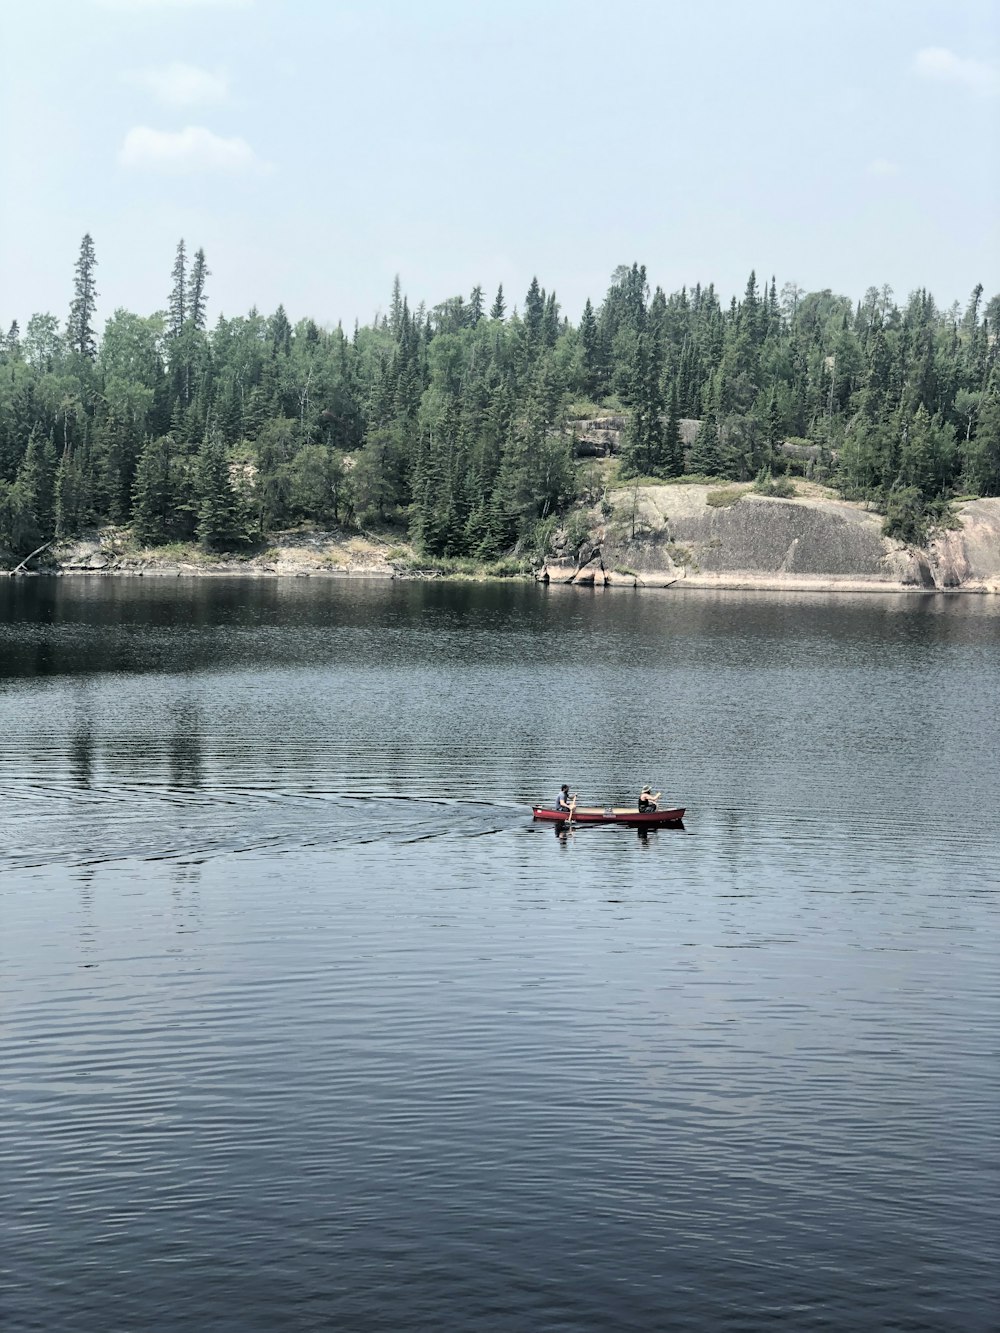 person riding on kayak near pine trees